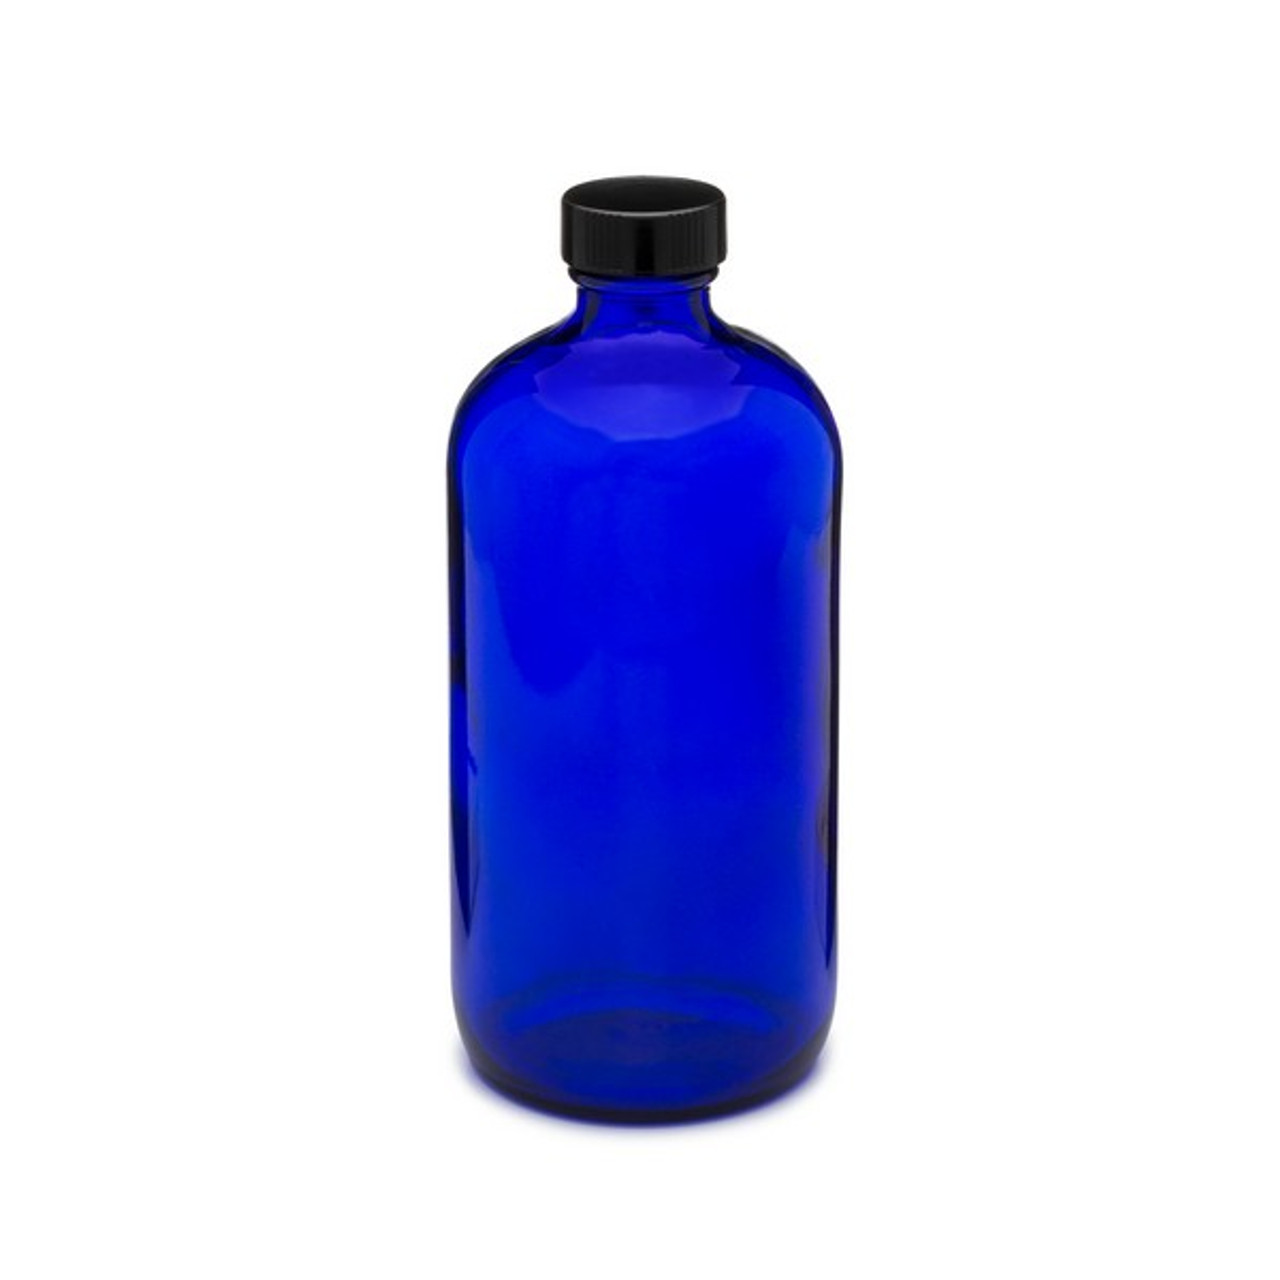 16 oz Cobalt Blue Boston Round Glass Bottle with Black Cap